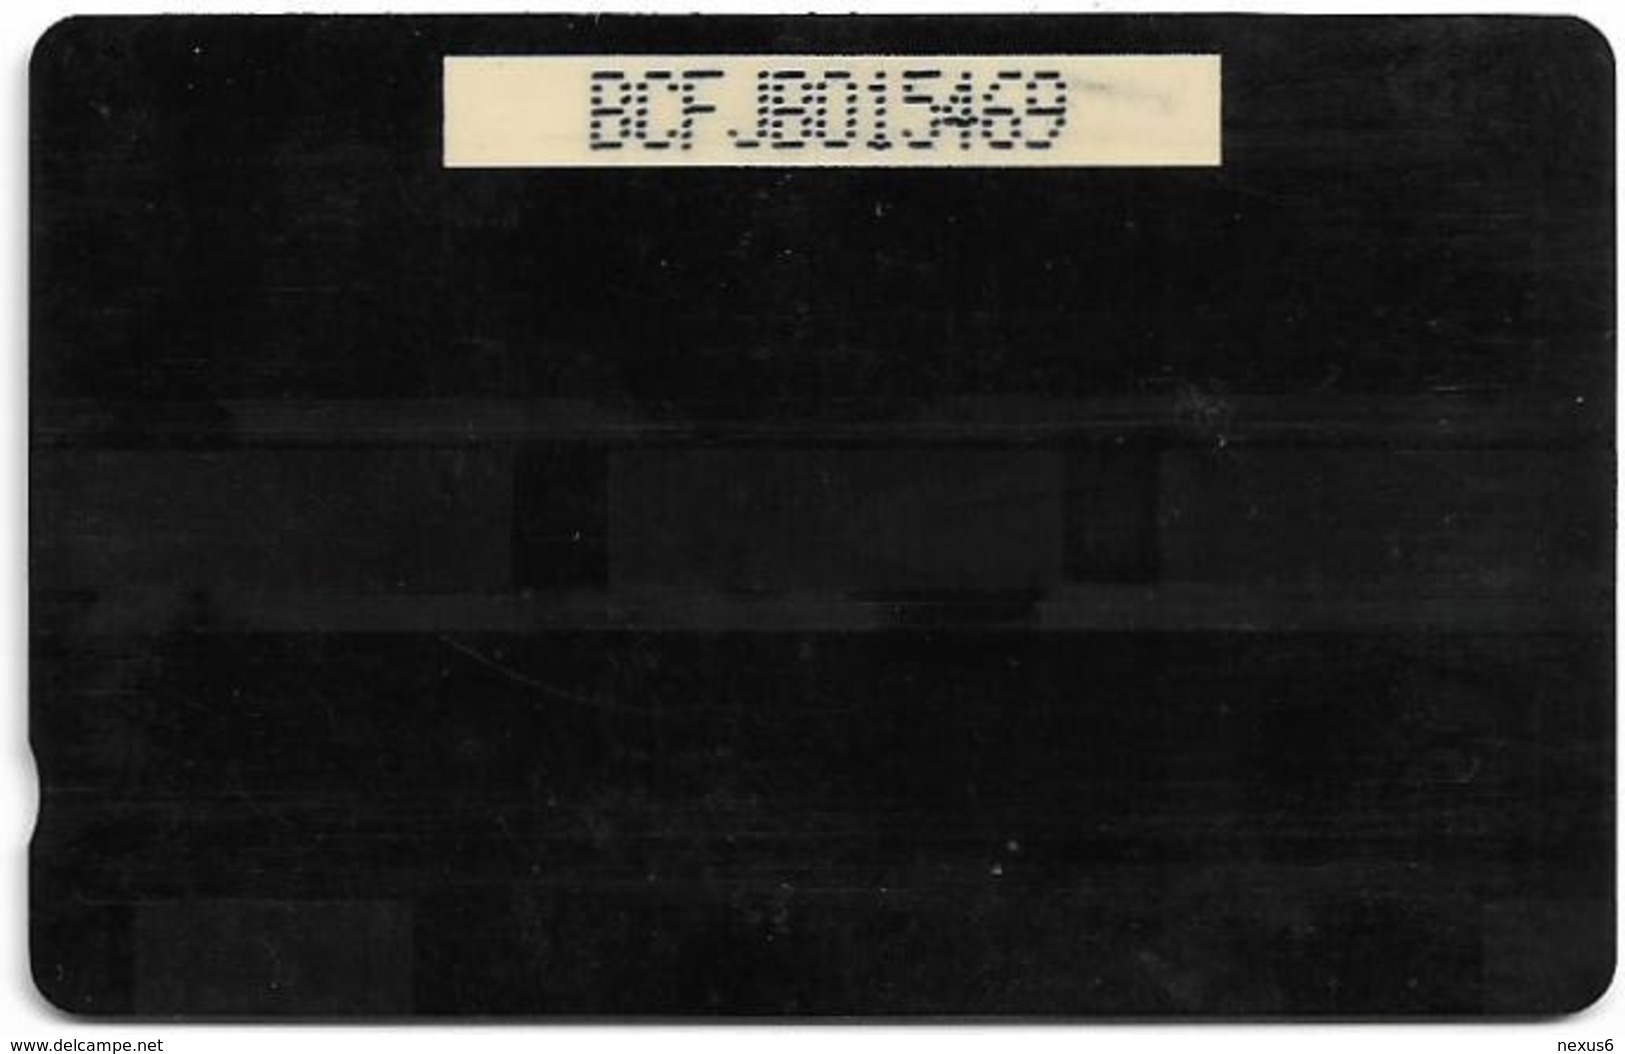 Fiji - Tel. Fiji - Emergency Issue - White Card - FCFJB (White Stripe), 1994, 3$, 100ex, Used 5R - Fiji